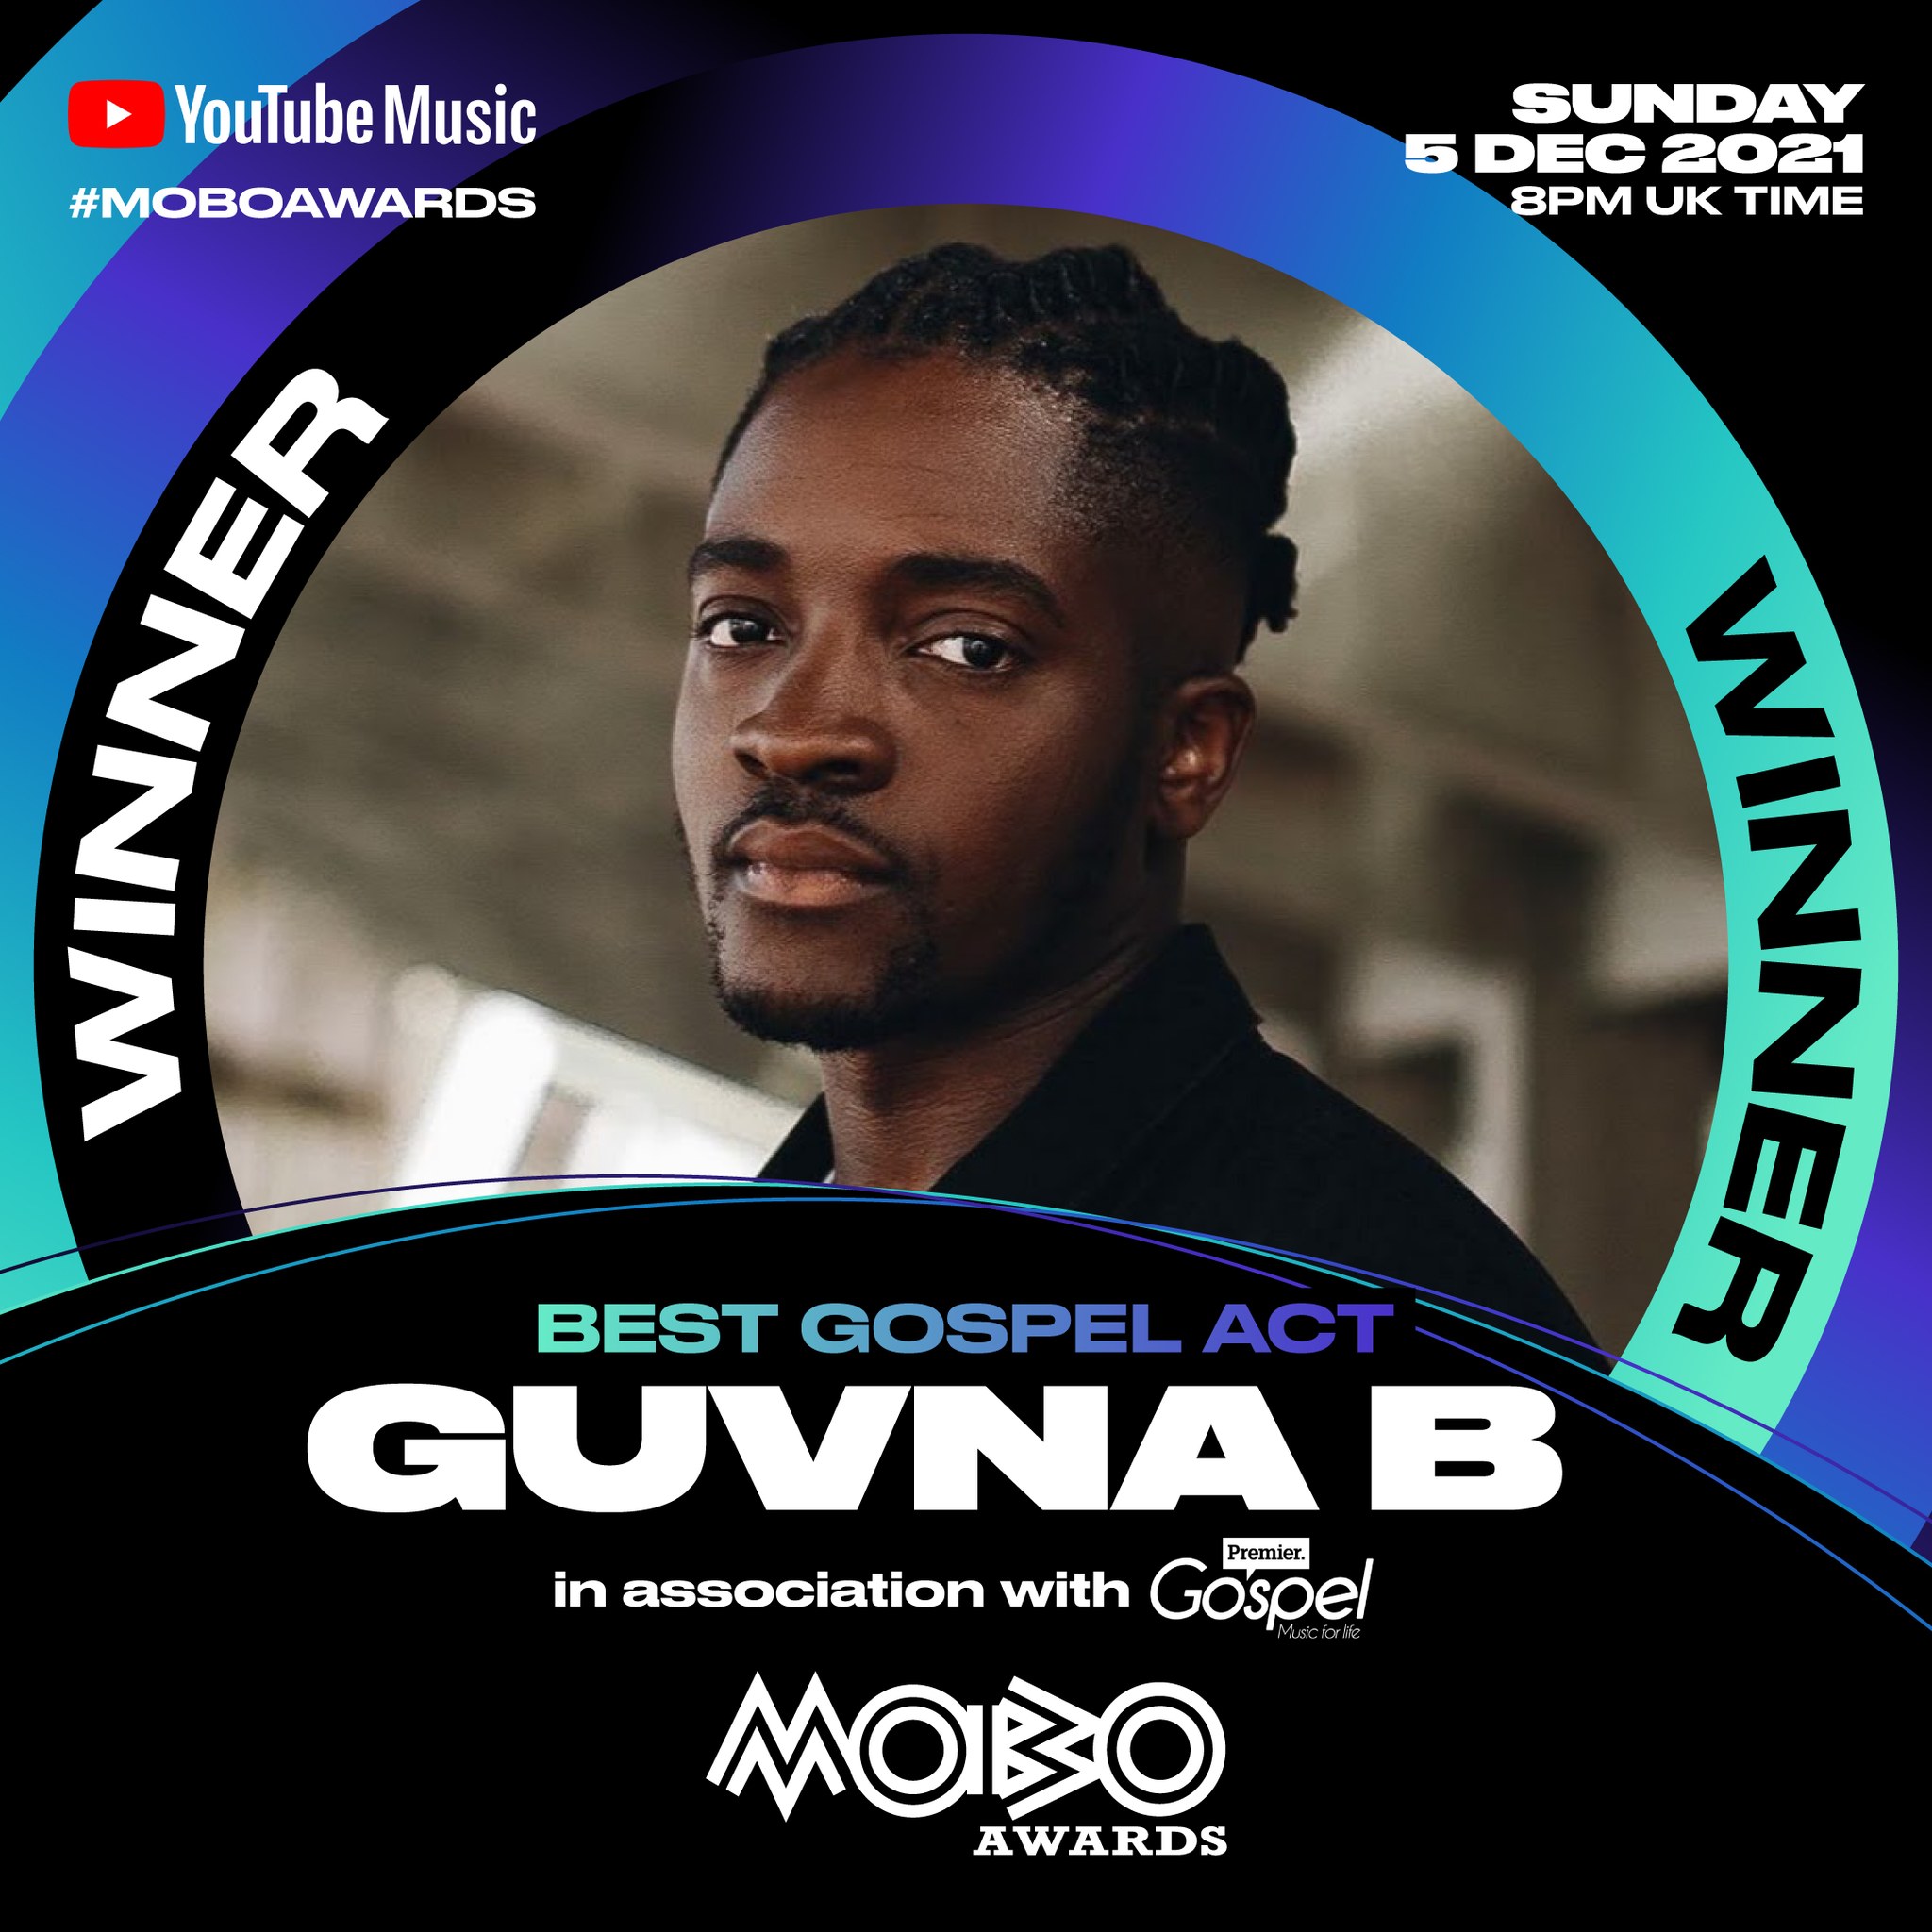 UK Rapper Guvna B Wins Third MOBO Award For Best Gospel Act